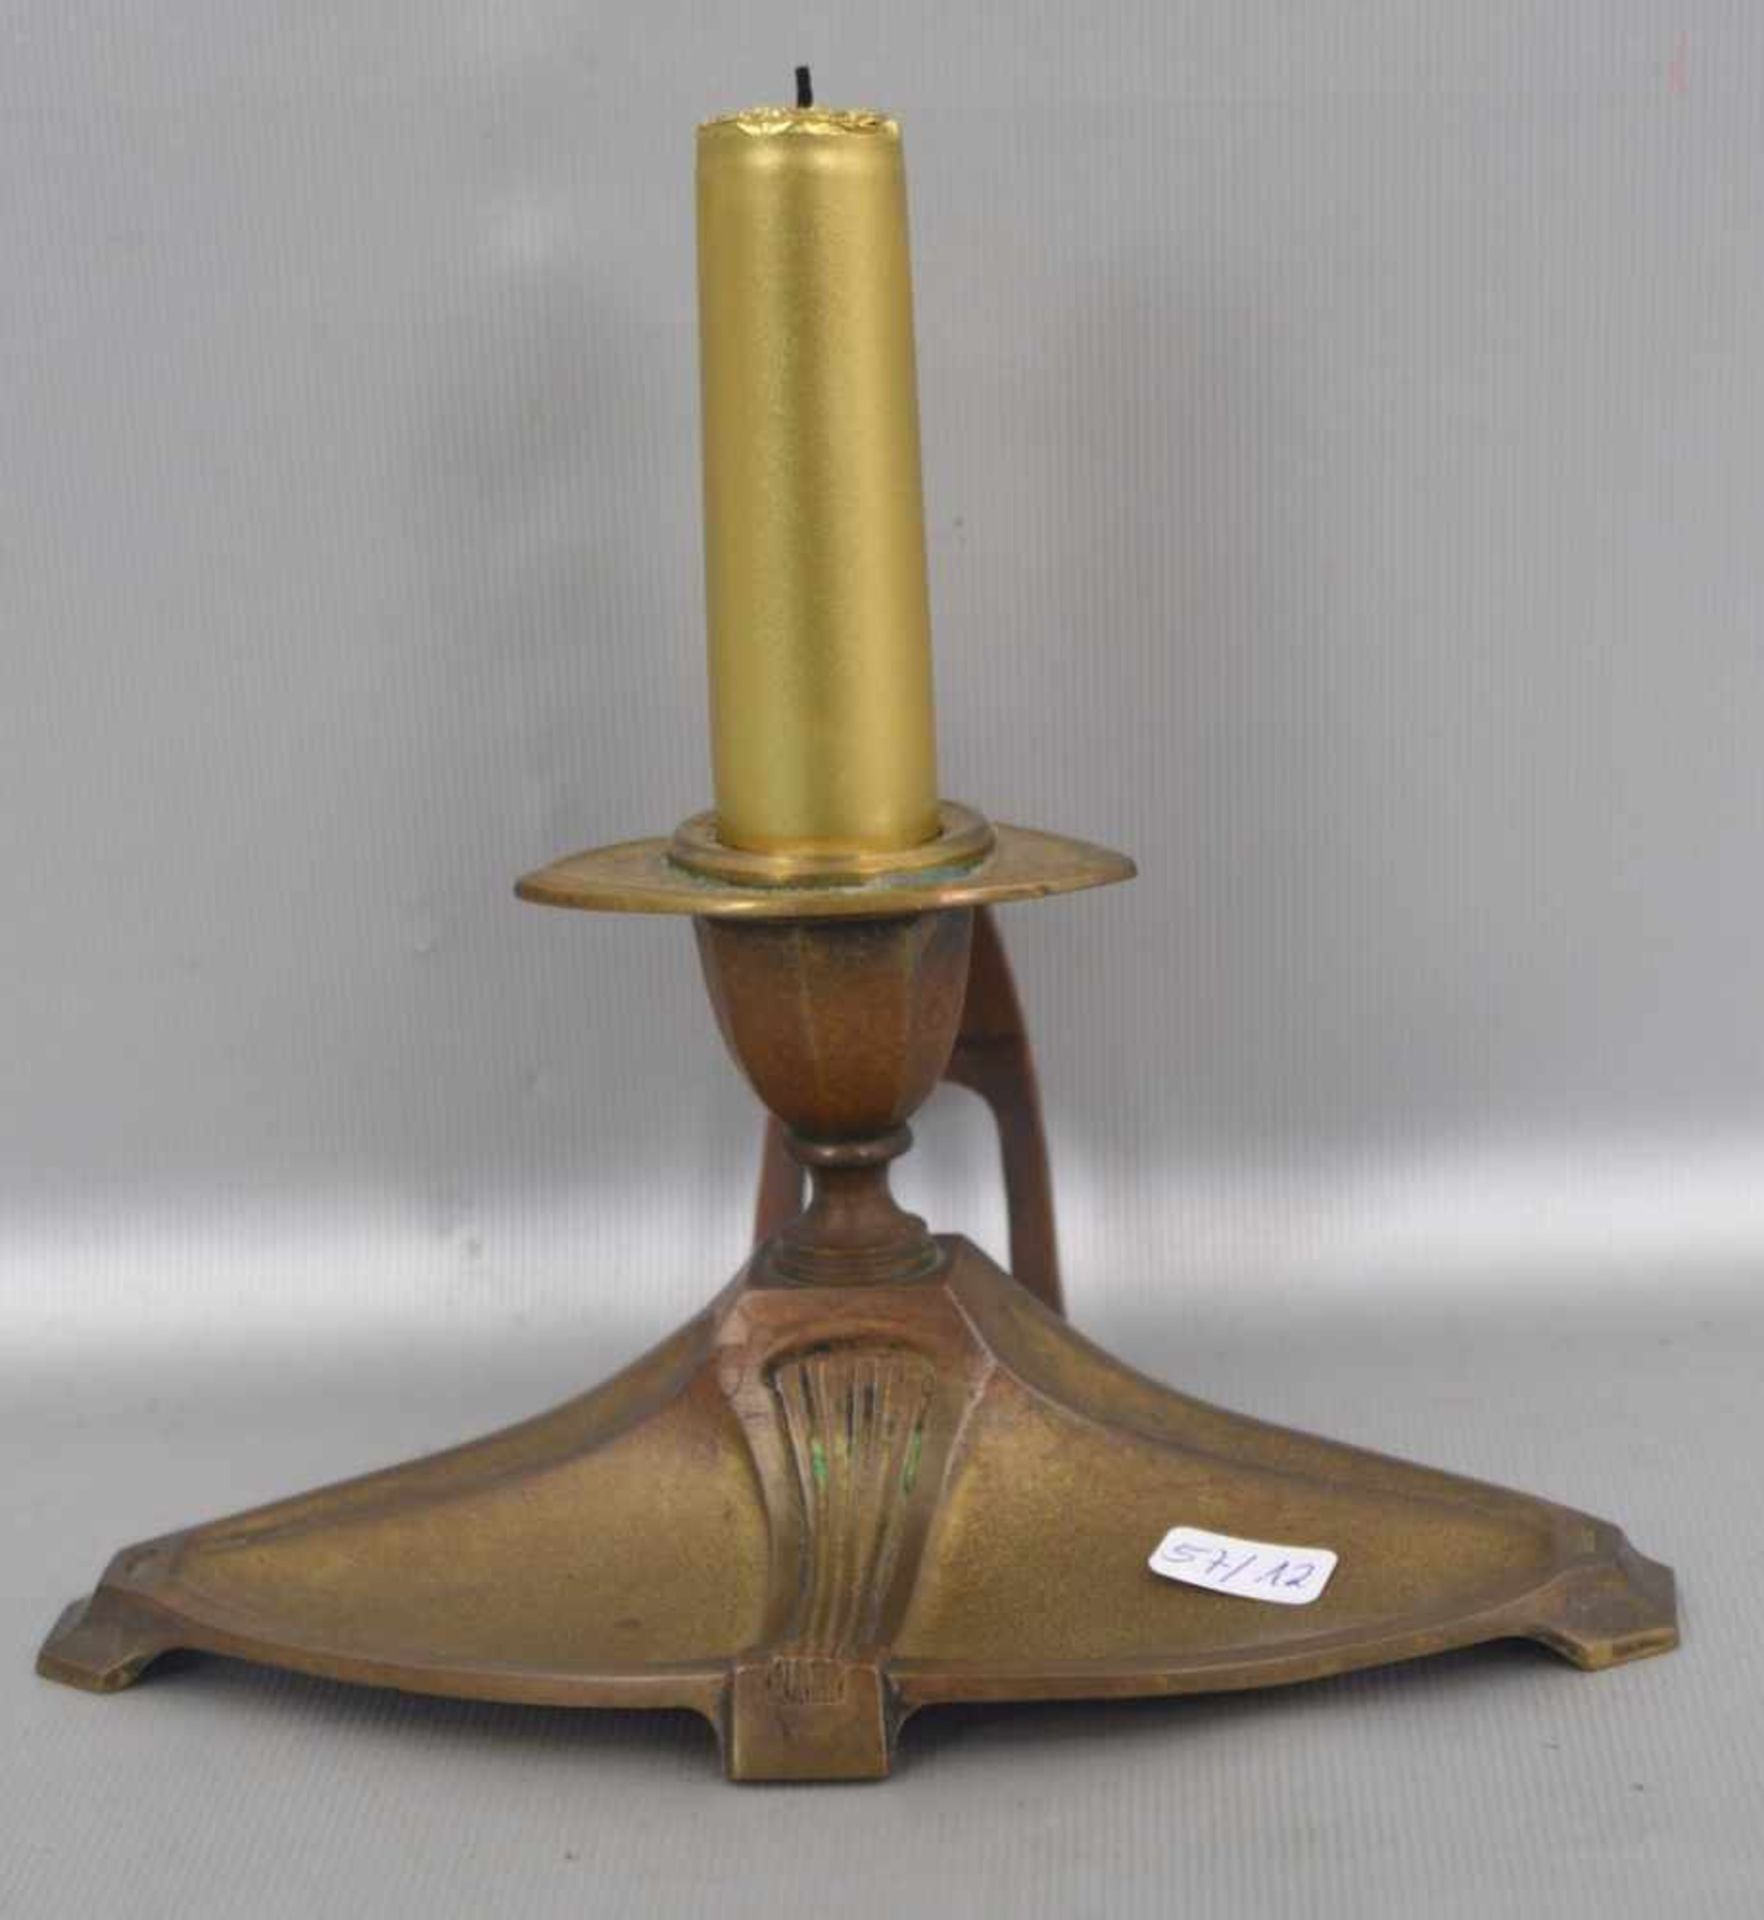 Jugendstil-Kerzenleuchter1-lichtig, Metall, mit Jugendstil-Ornamenten verziert, H 8 cm, um 1900